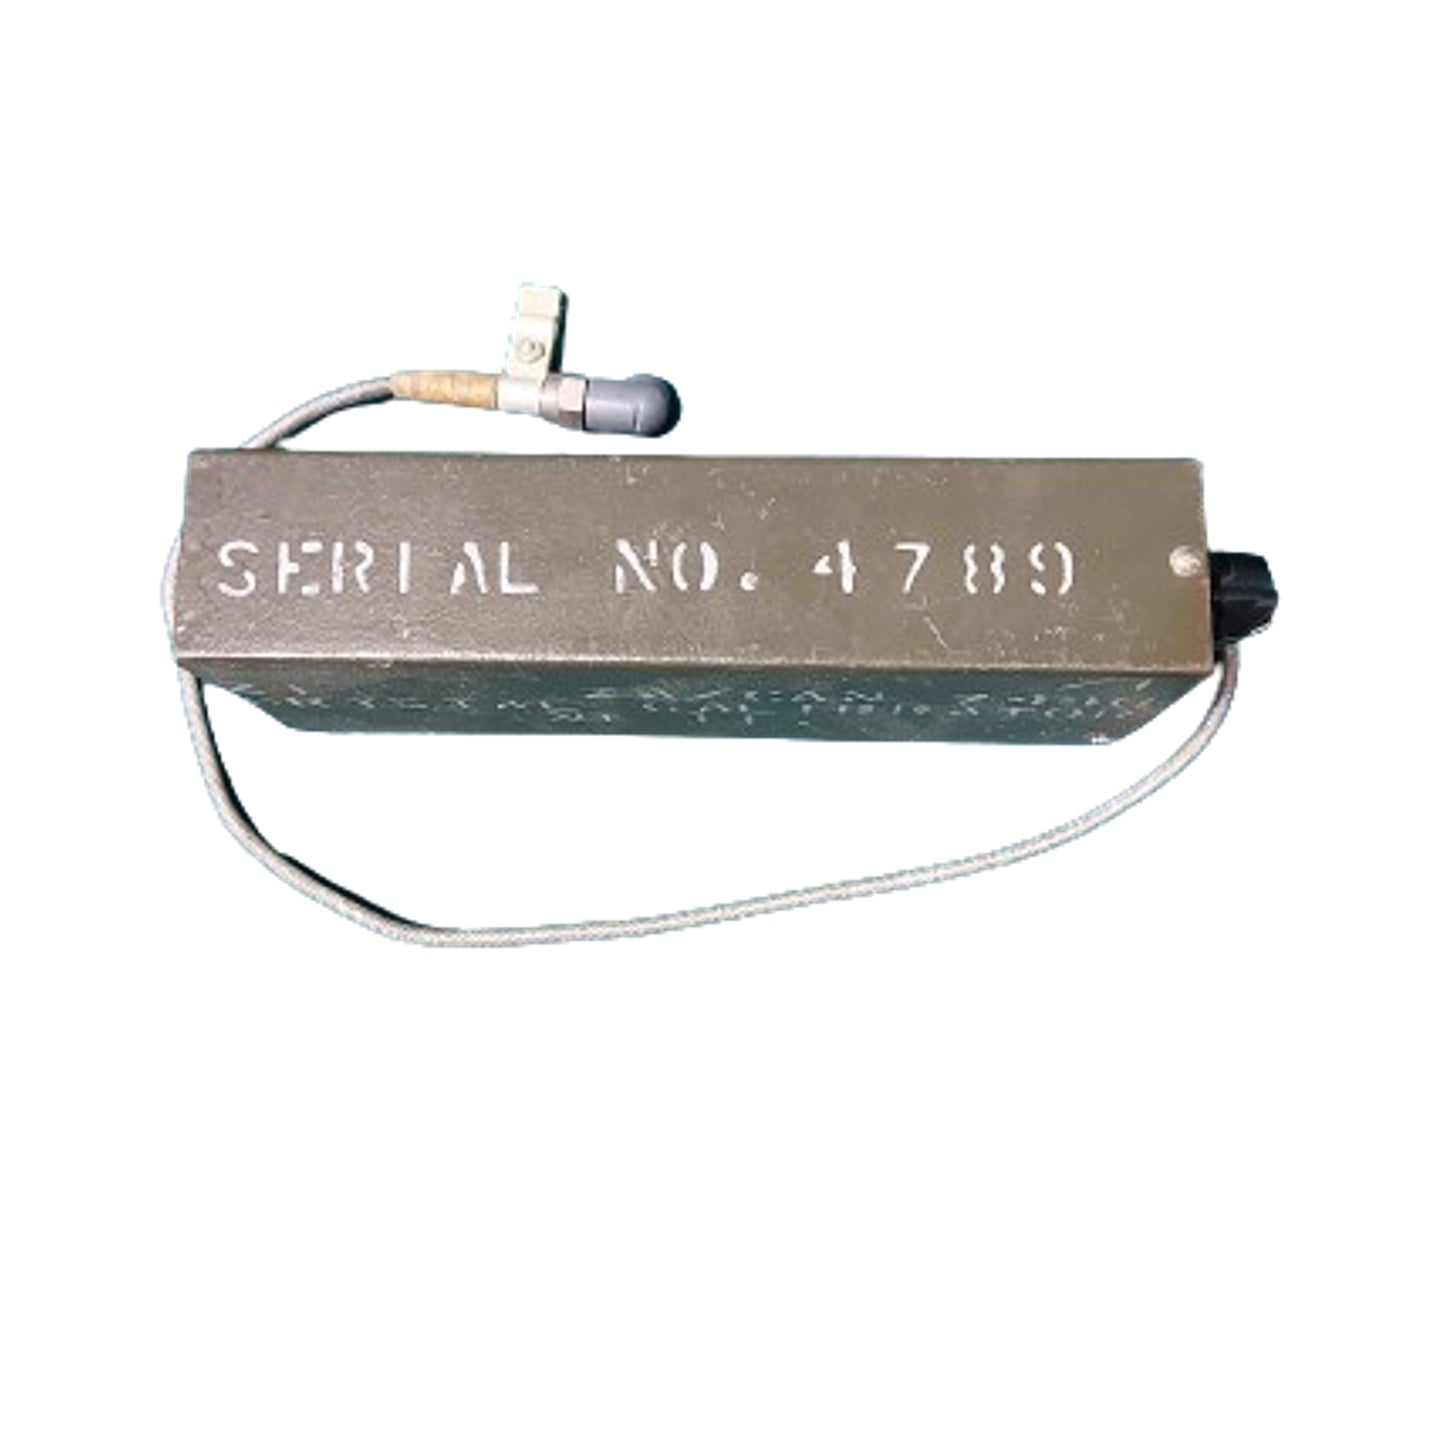 WW2 Canadian Wireless 19 Set Crystal Calibrator